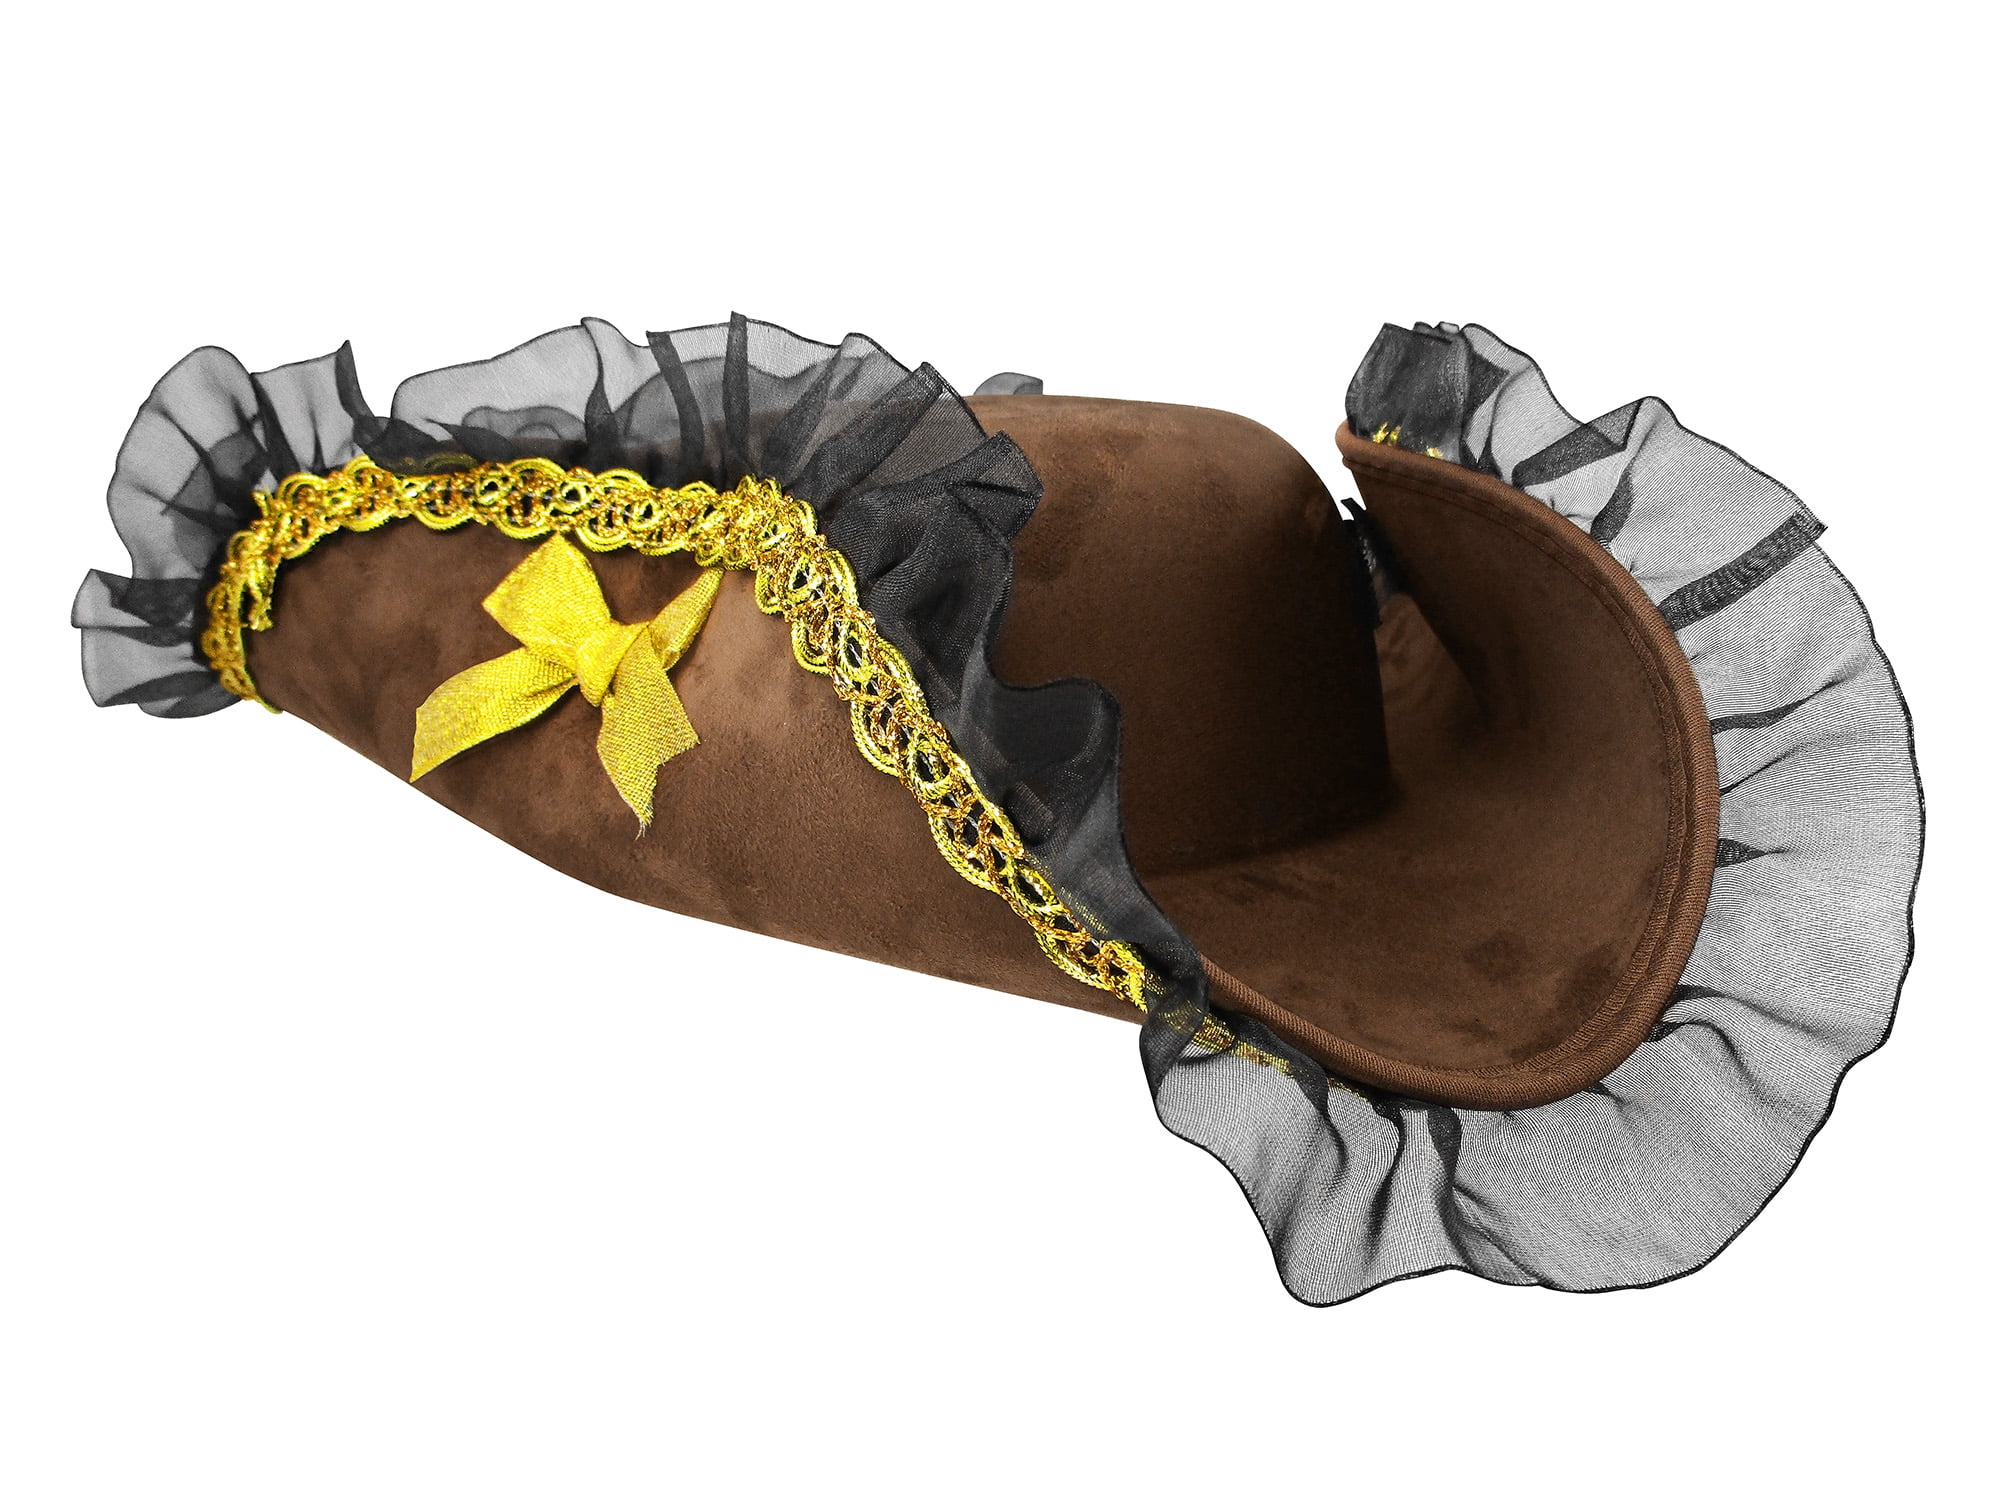 Details about   Pilgrim Hat With Buckle Gold Black Shoe Buckles Quaker Amish Costume Set 